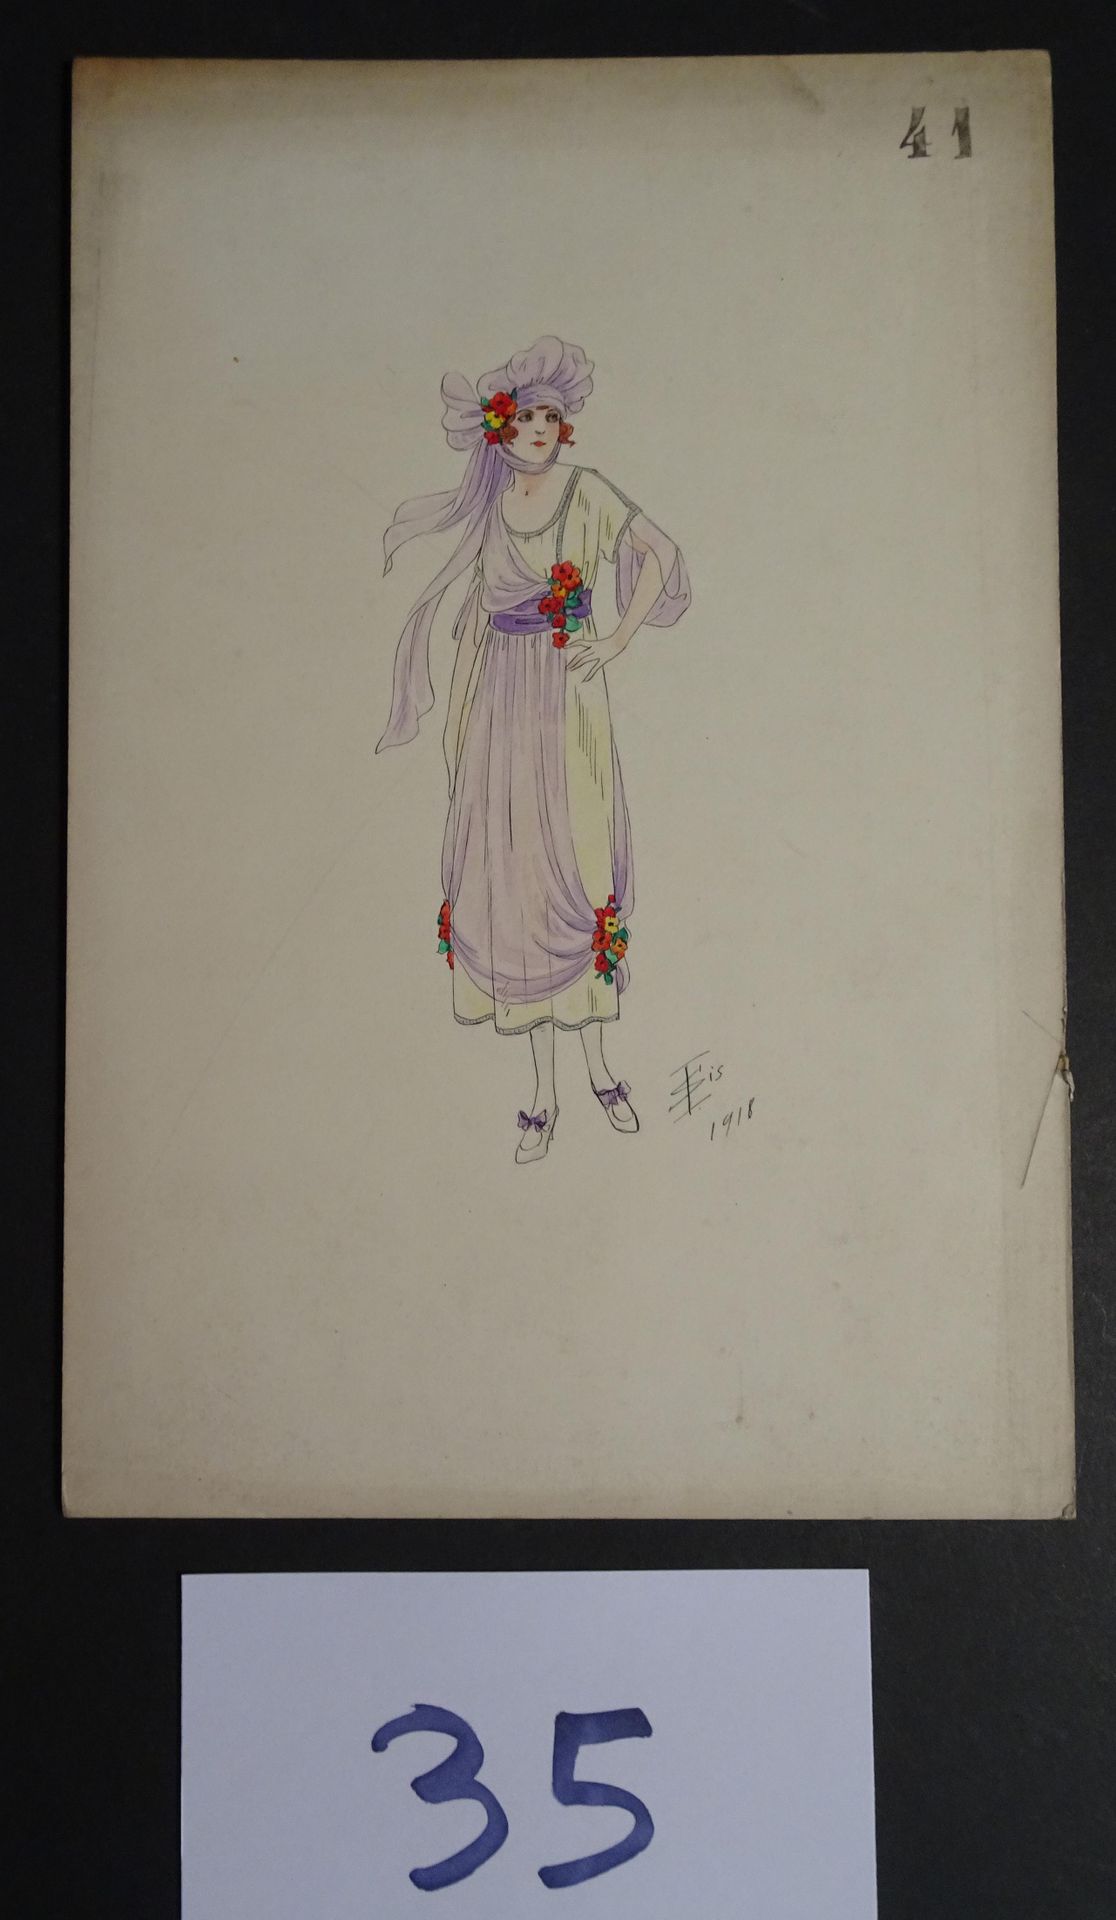 SOKOLOFF SOKOLOFF IGOR ( début du Xxéme siècle) 

"Femme à la robe violine". Plu&hellip;